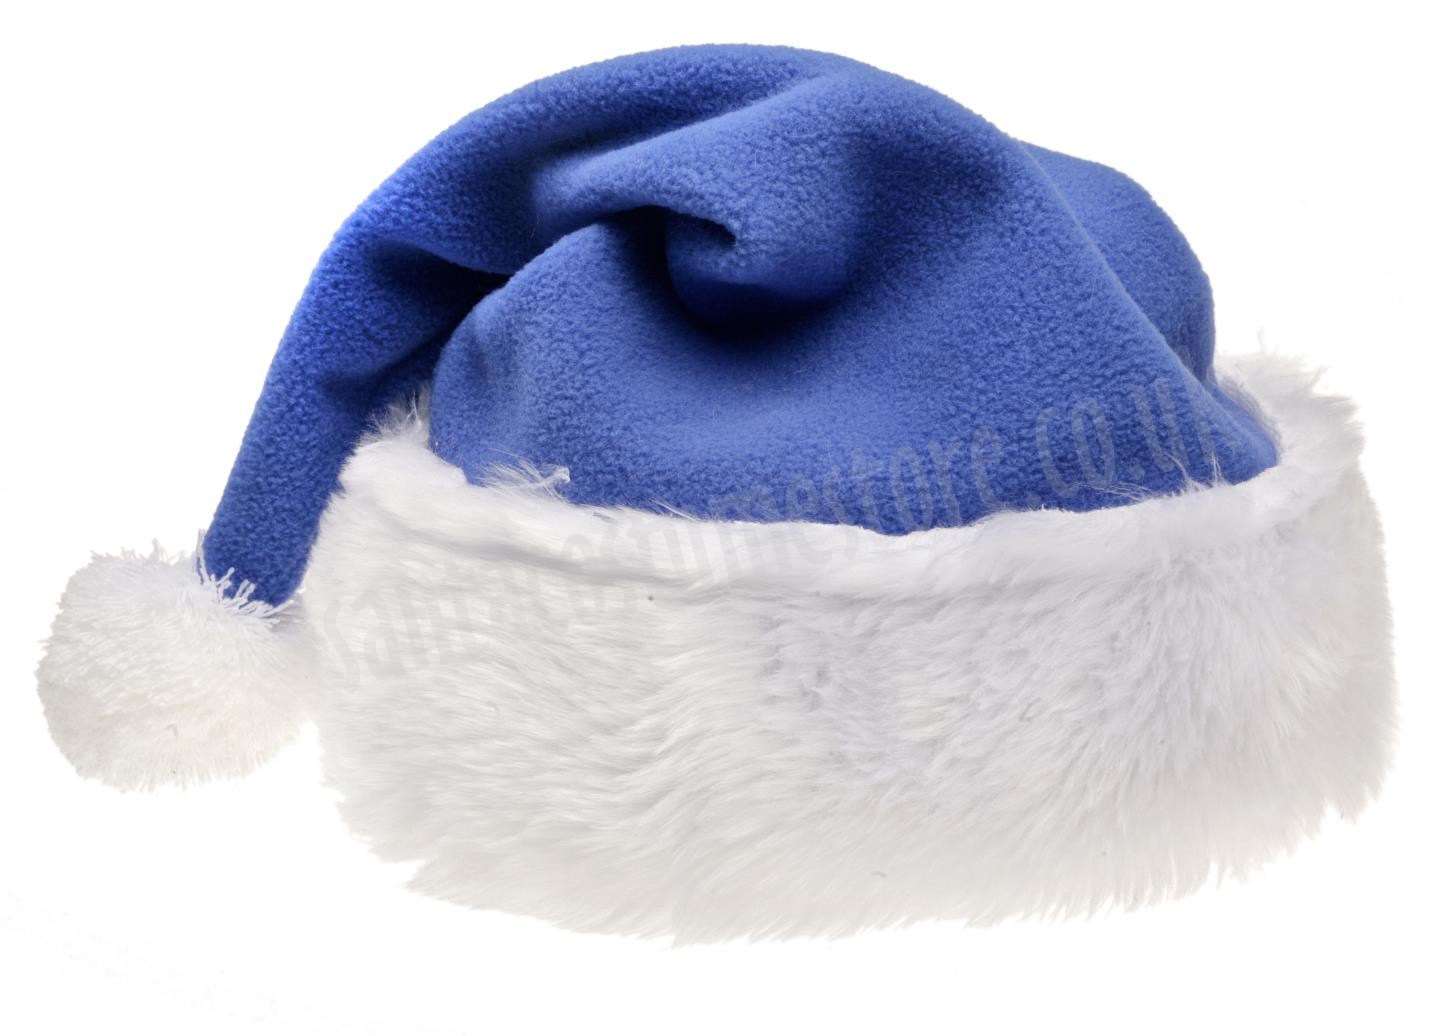 Blue Santa's hat - santacostumestore.co.uk